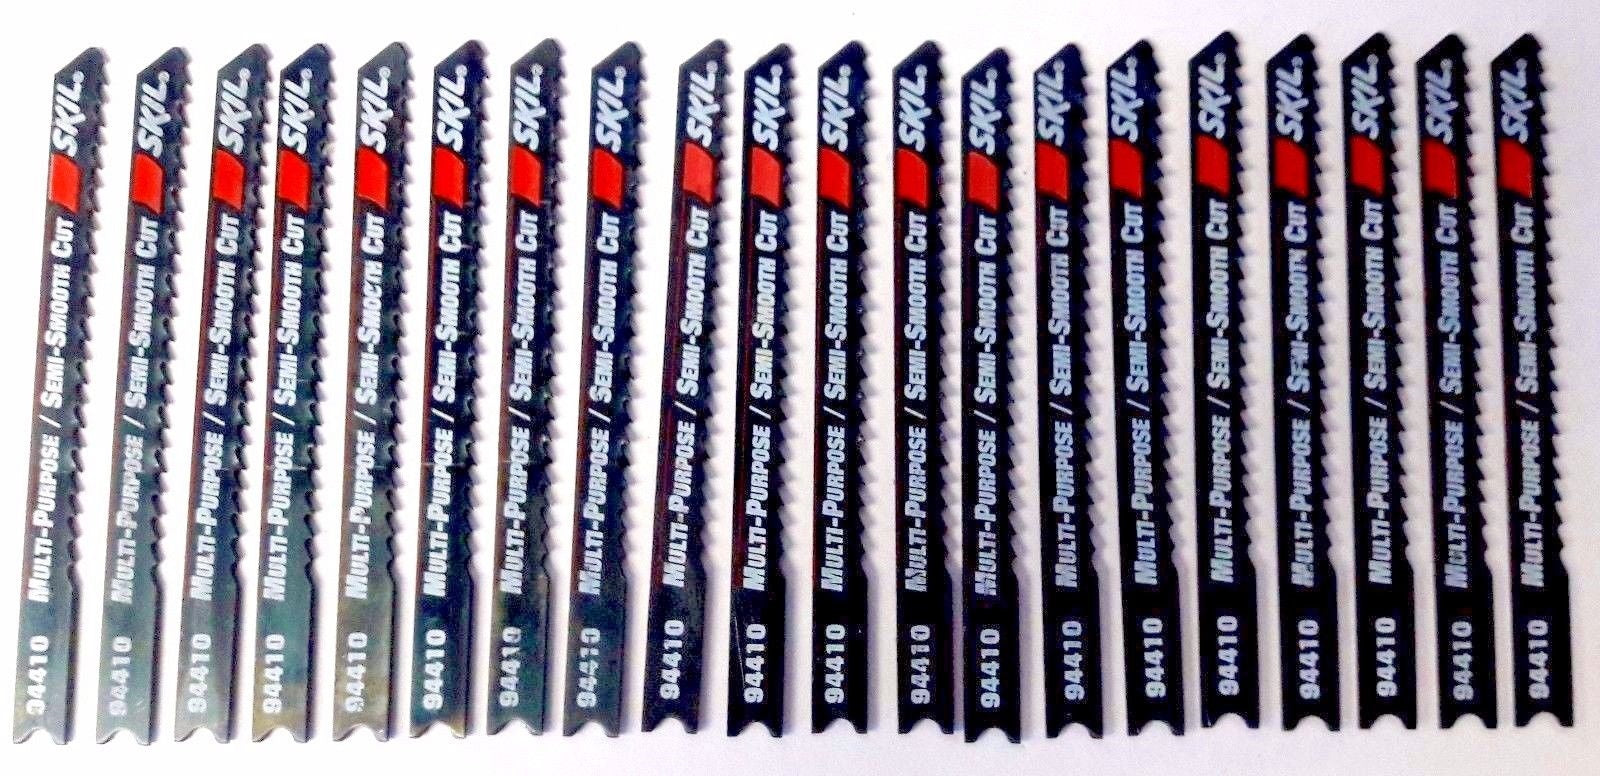 Skil 94410 3-1/8" x 10 TPI Multi-Purpose Jig Saw Blades 20pcs